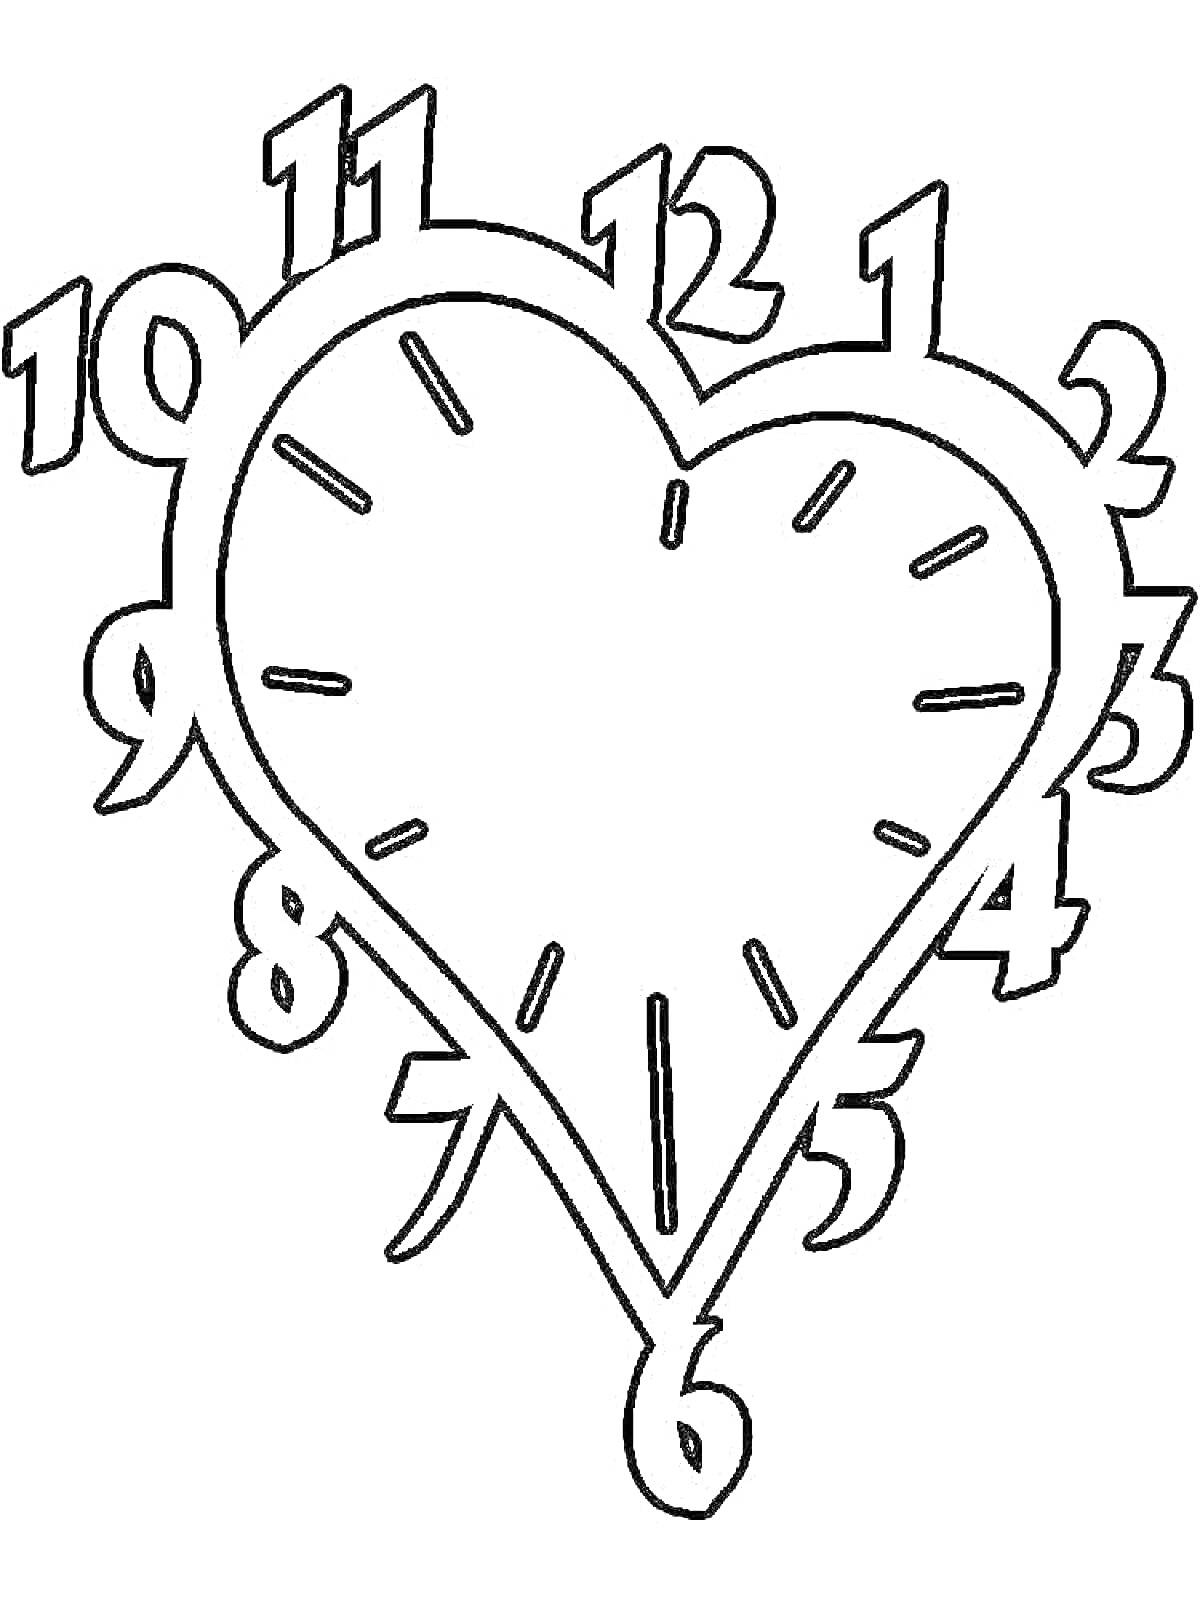 Раскраска Часы в форме сердца с часами и цифрами